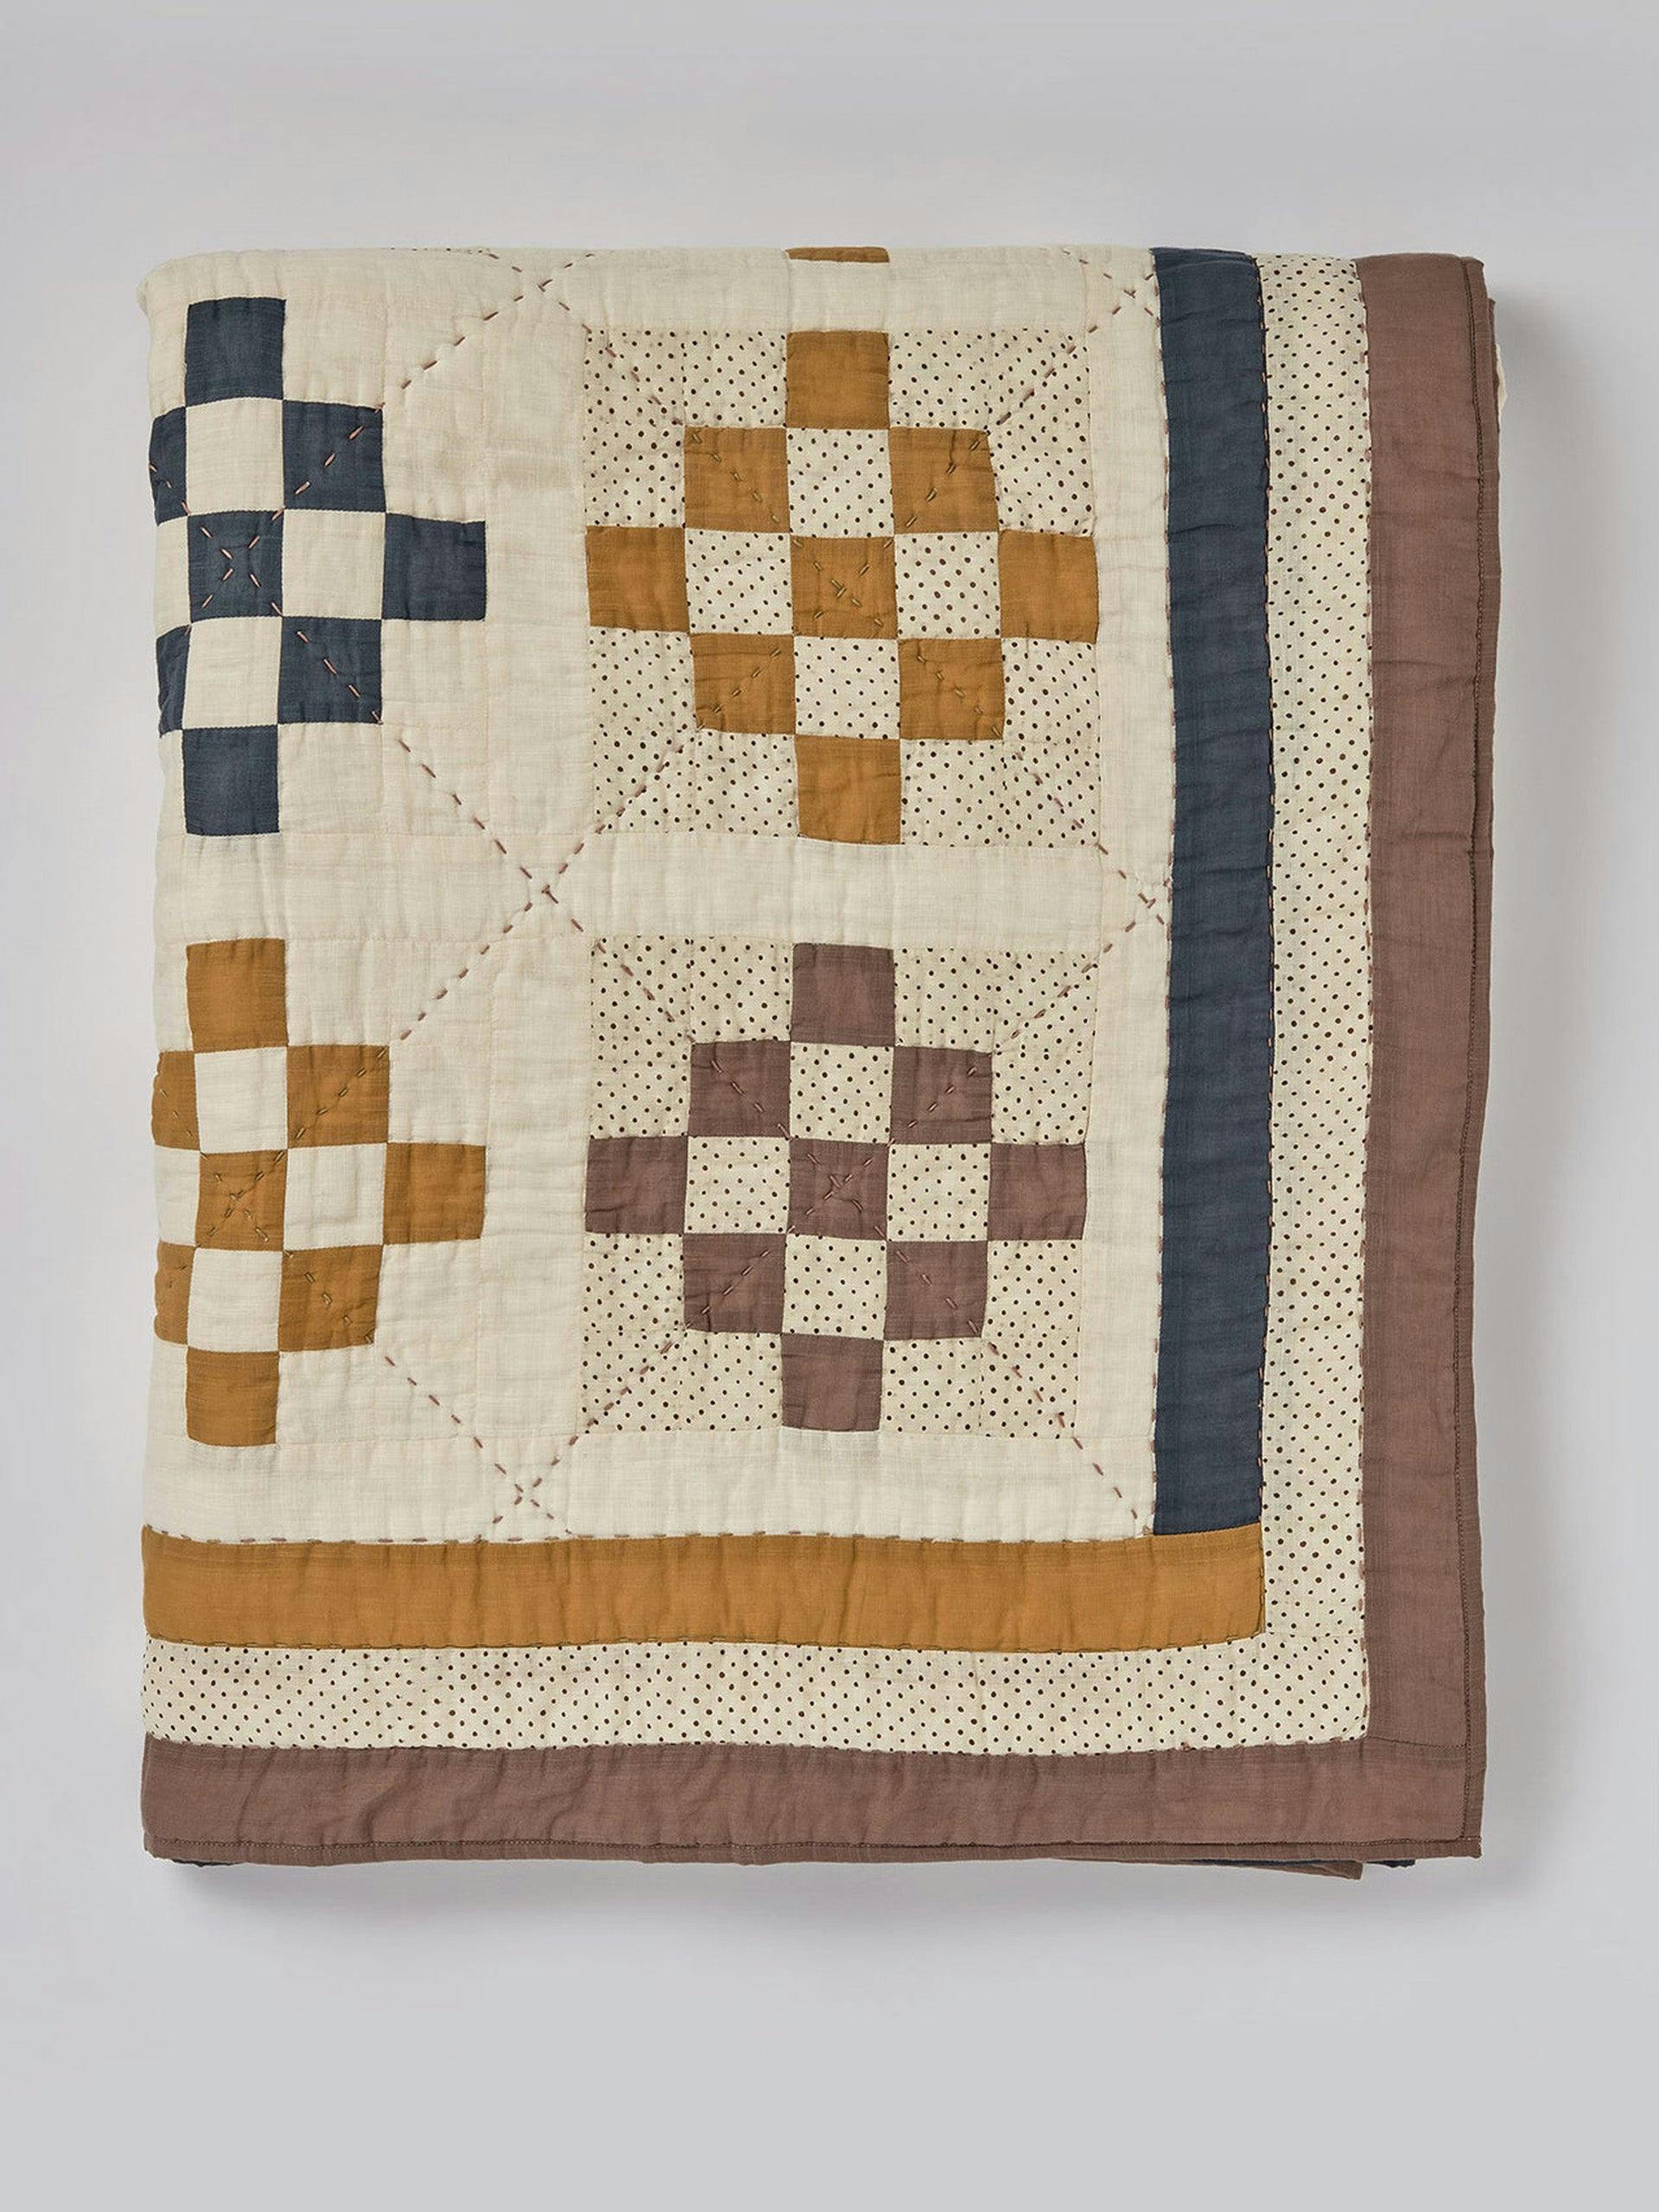 Hand-stitched cotton patchwork quilt